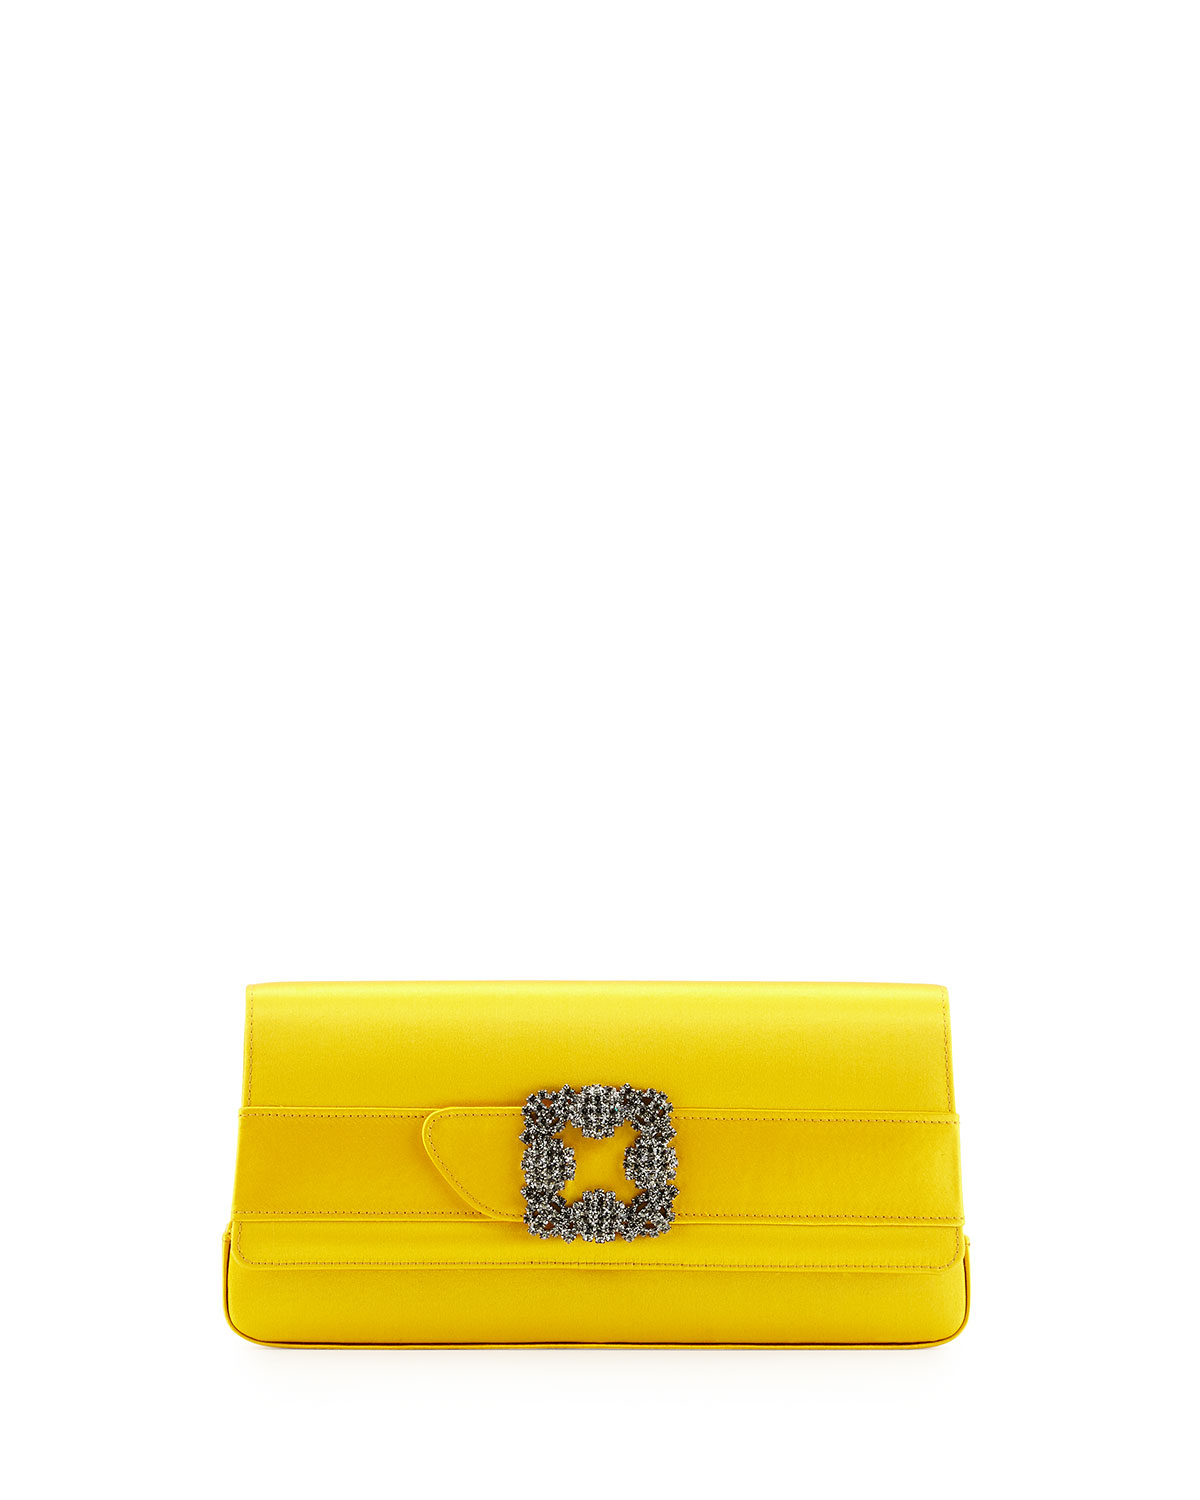 Manolo blahnik Gothisi Crystal-Buckle Satin Clutch Bag in Yellow | Lyst